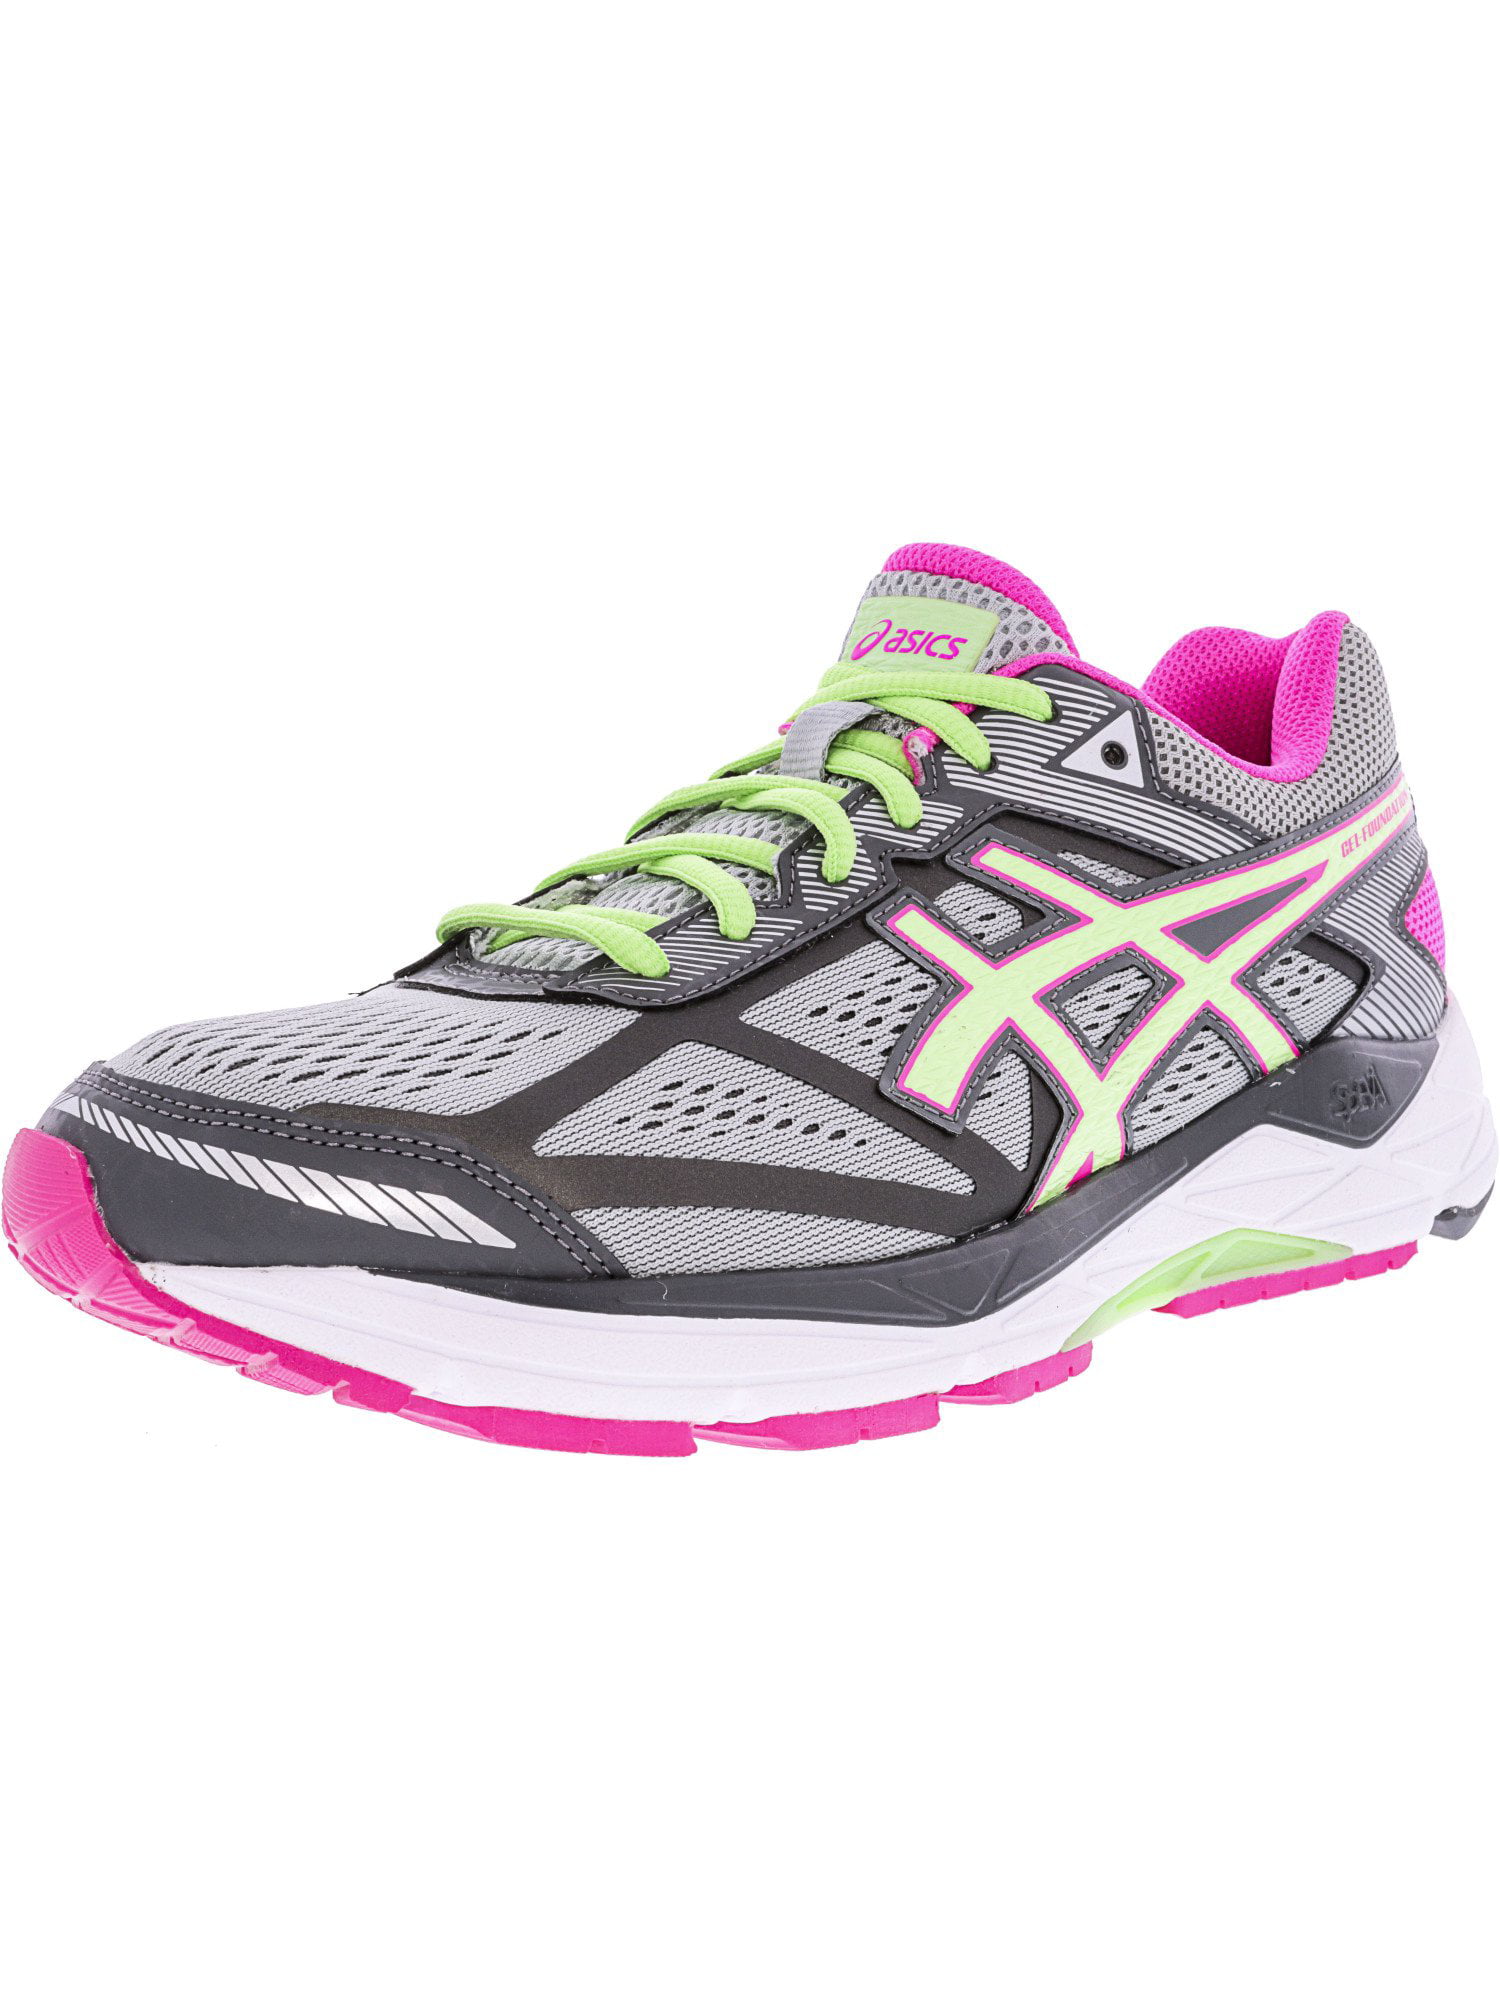 Asics Women's Gel-Foundation 12 Grey / Pistachio Pink Running Shoe - 8M - Walmart.com